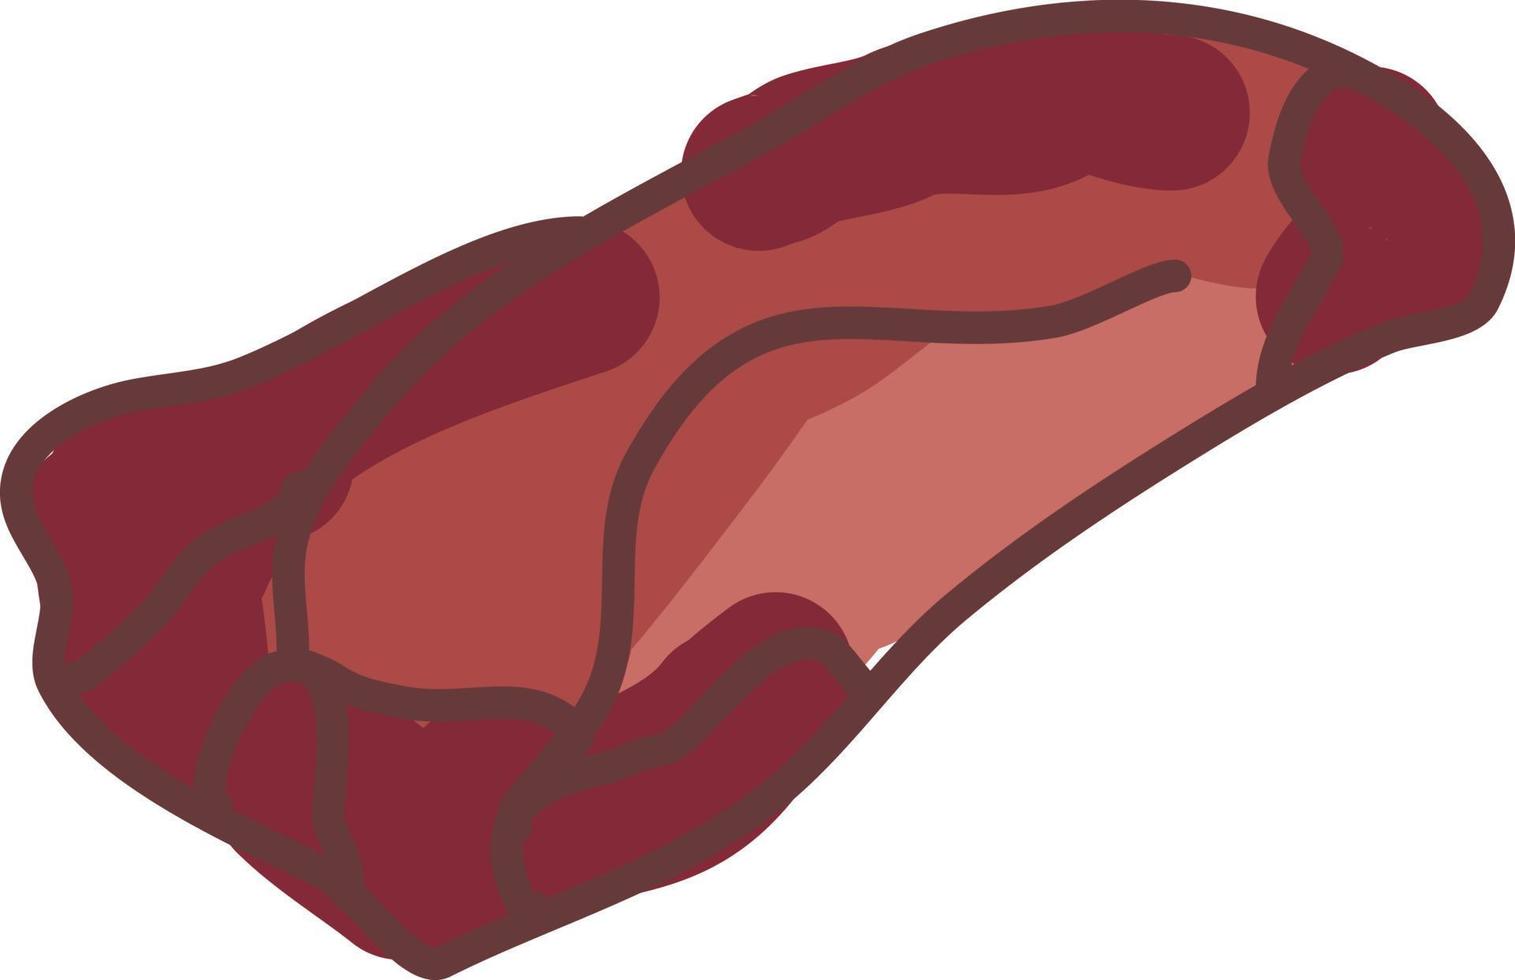 Meat filet, illustration, vector on white background.